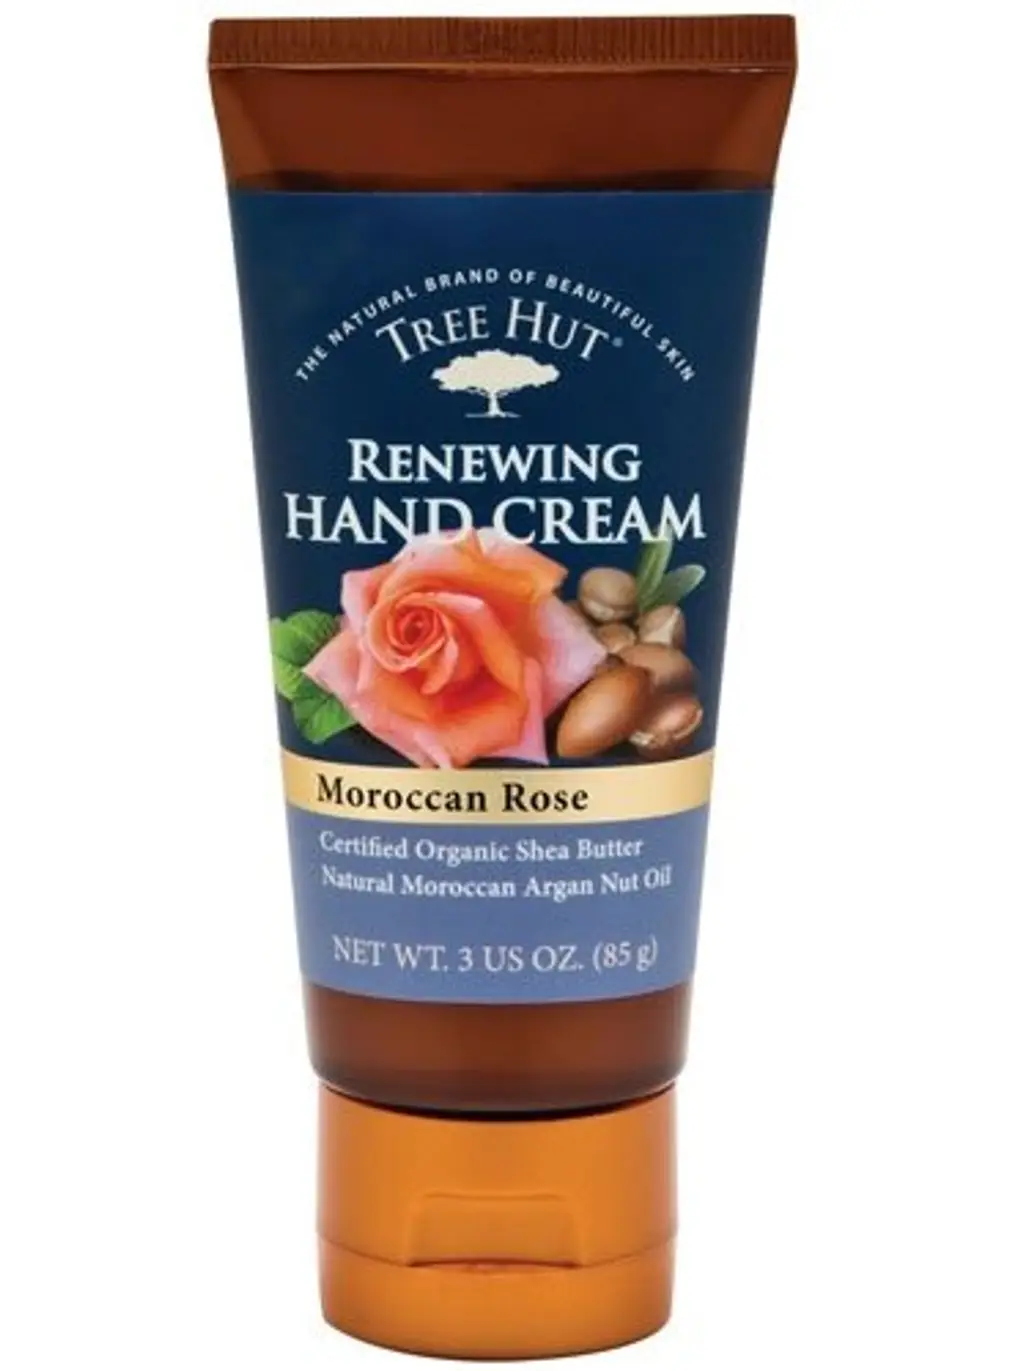 Tree Hut Renewing Hand Cream